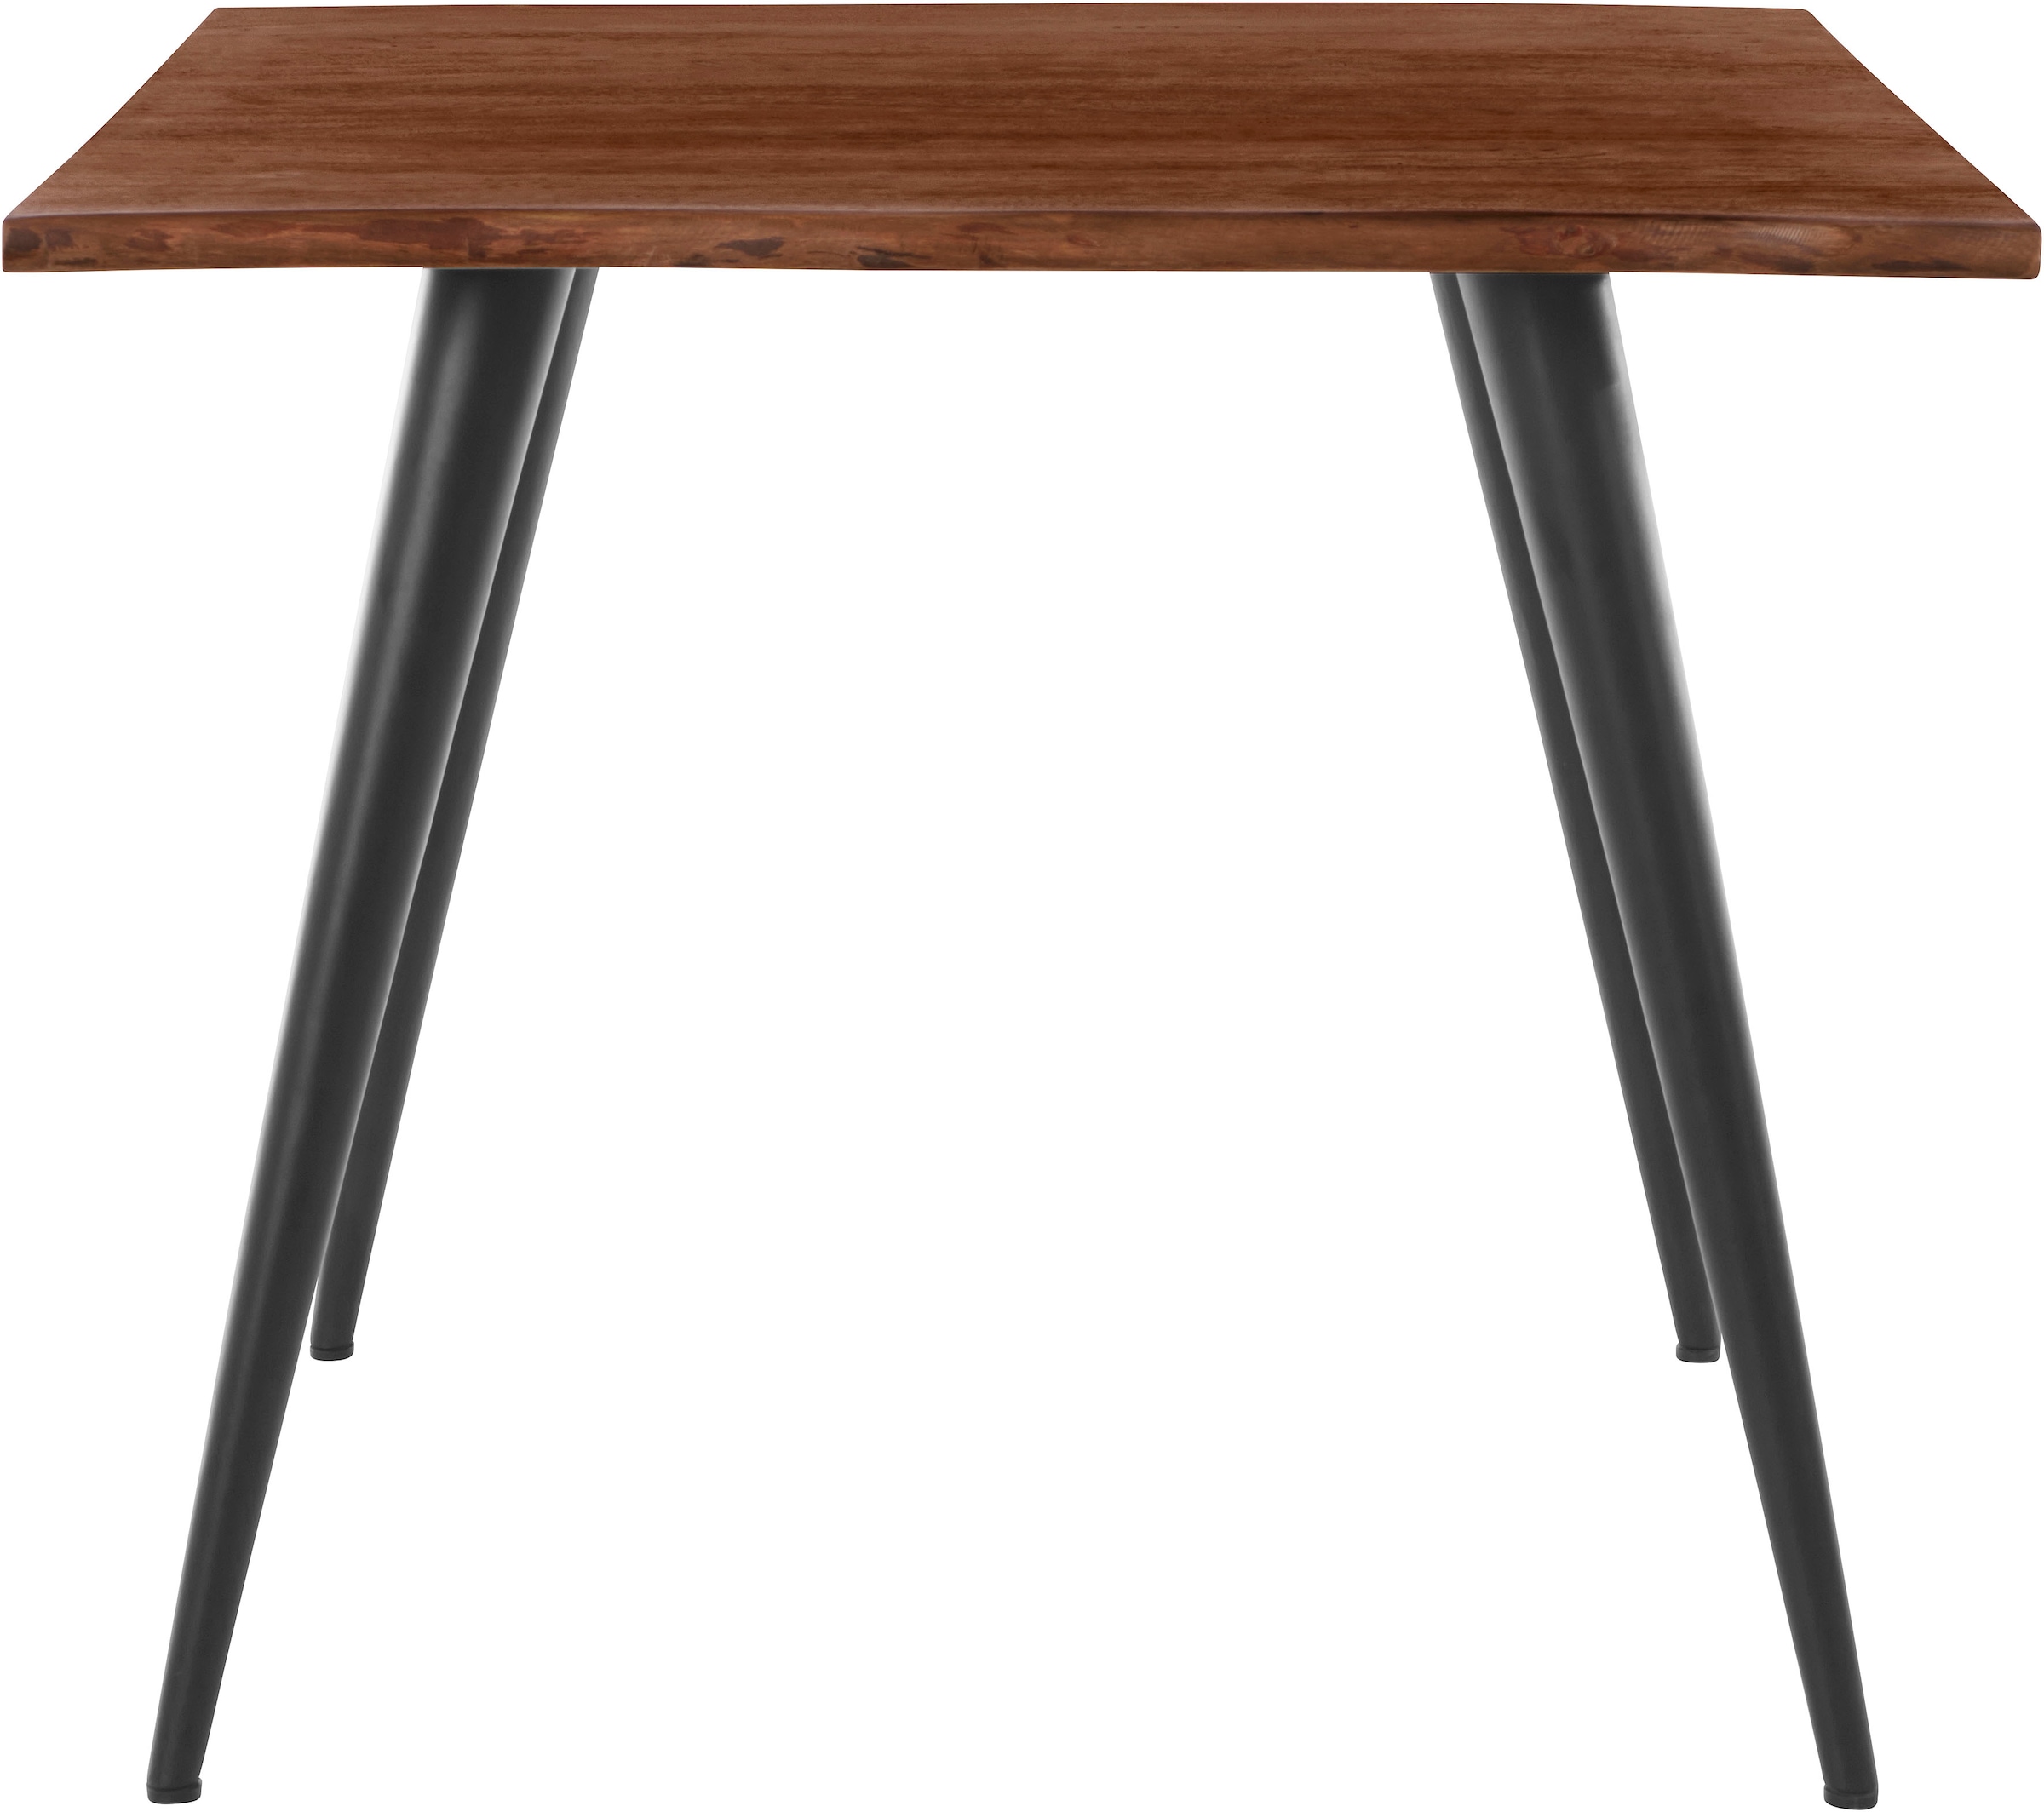 Baumkantentisch, Massivholz, 26mm Tischplattenstärke, in verschiedenen Größen